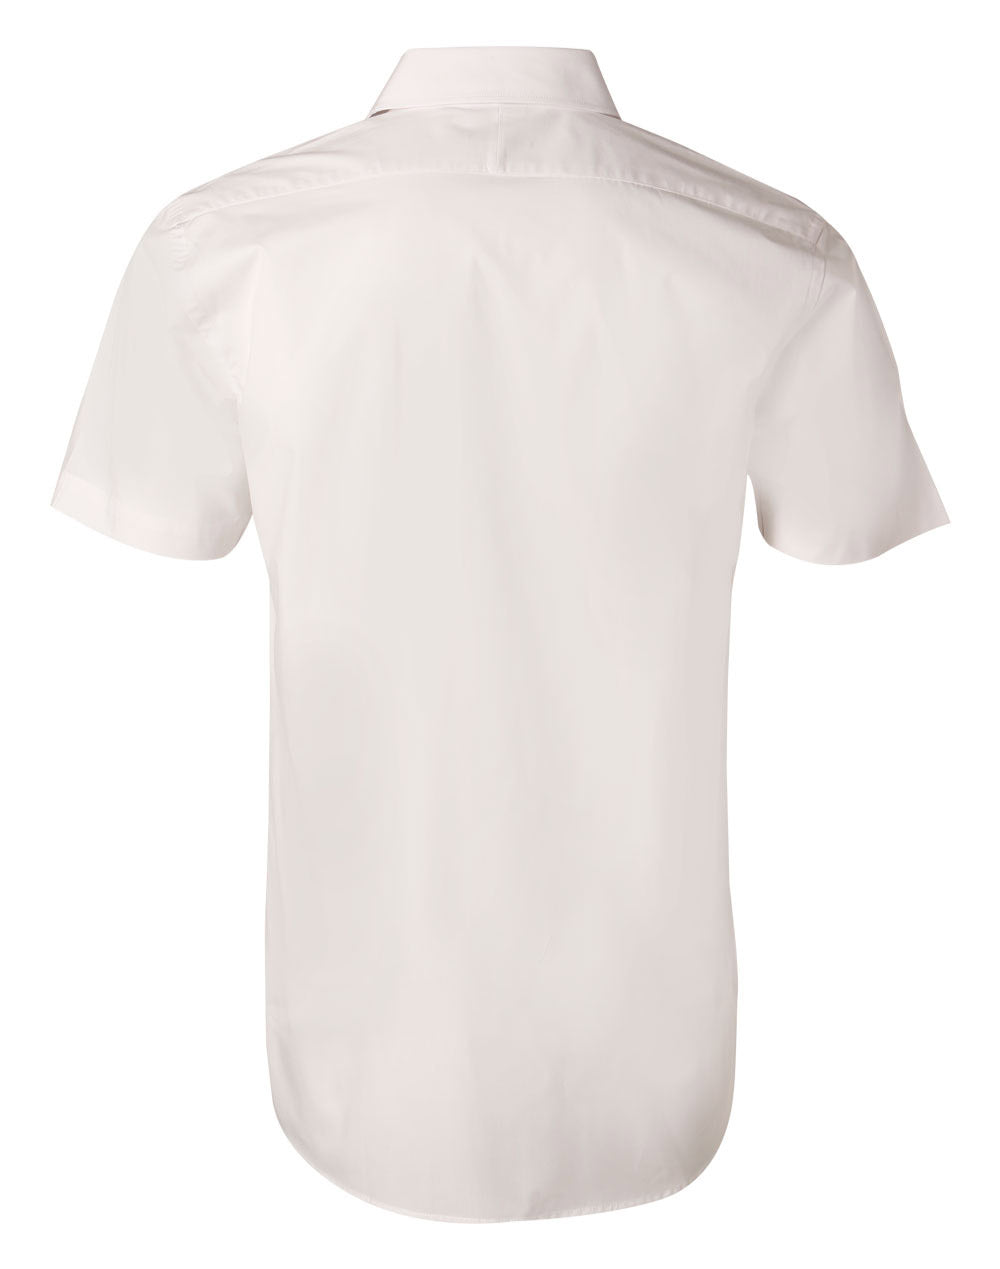 Winning Spirit-Men's Cotton/Poly Stretch Short Sleeve Shirt-M7020S